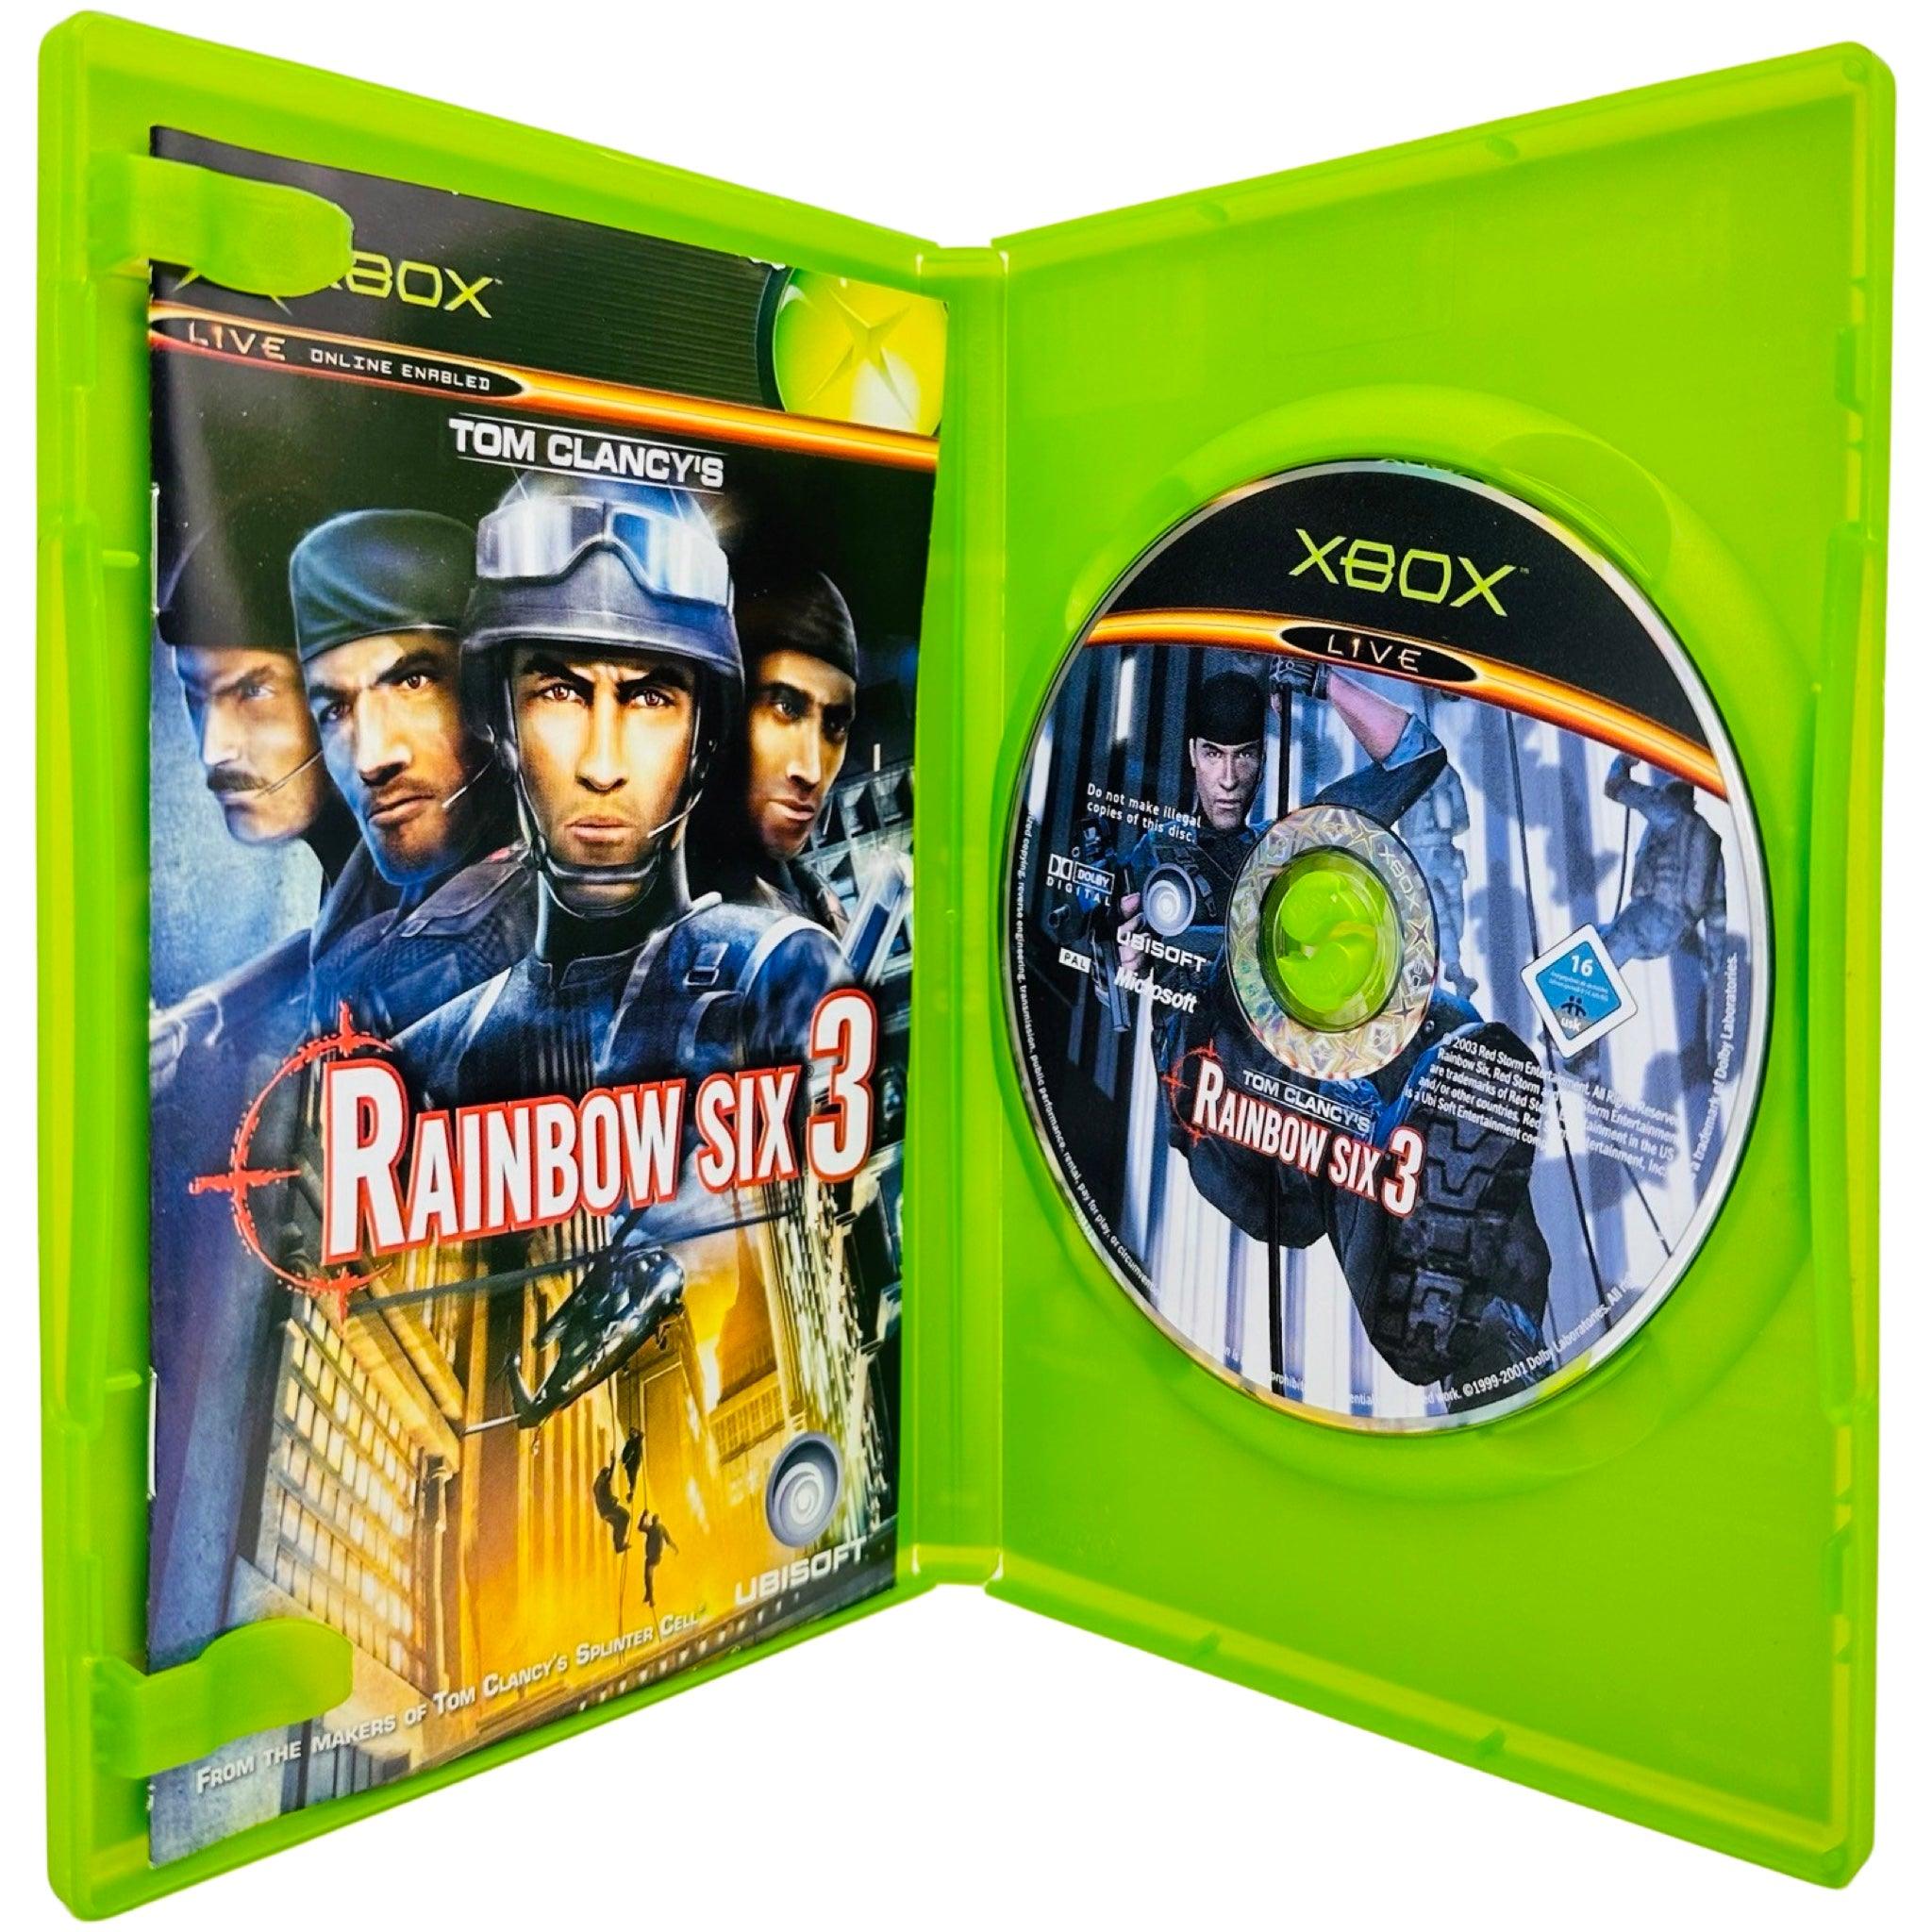 Xbox: Rainbow Six 3 - RetroGaming.no